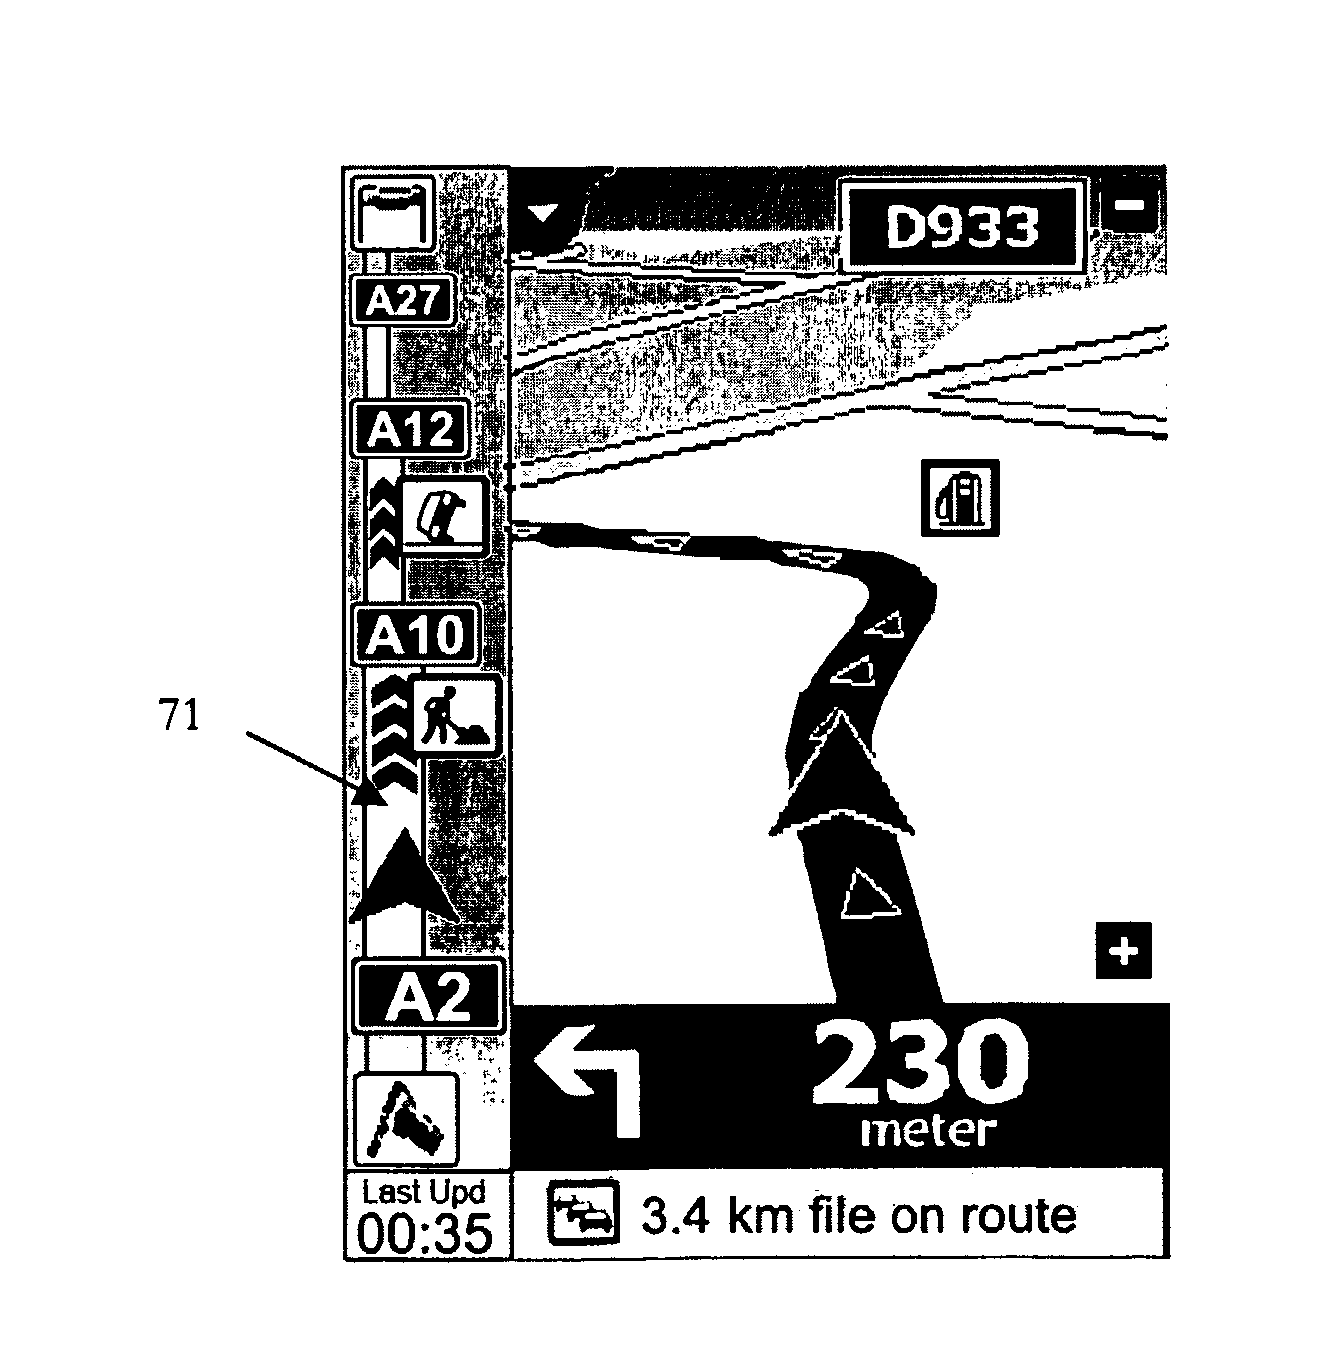 Navigation device displaying dynamic travel information